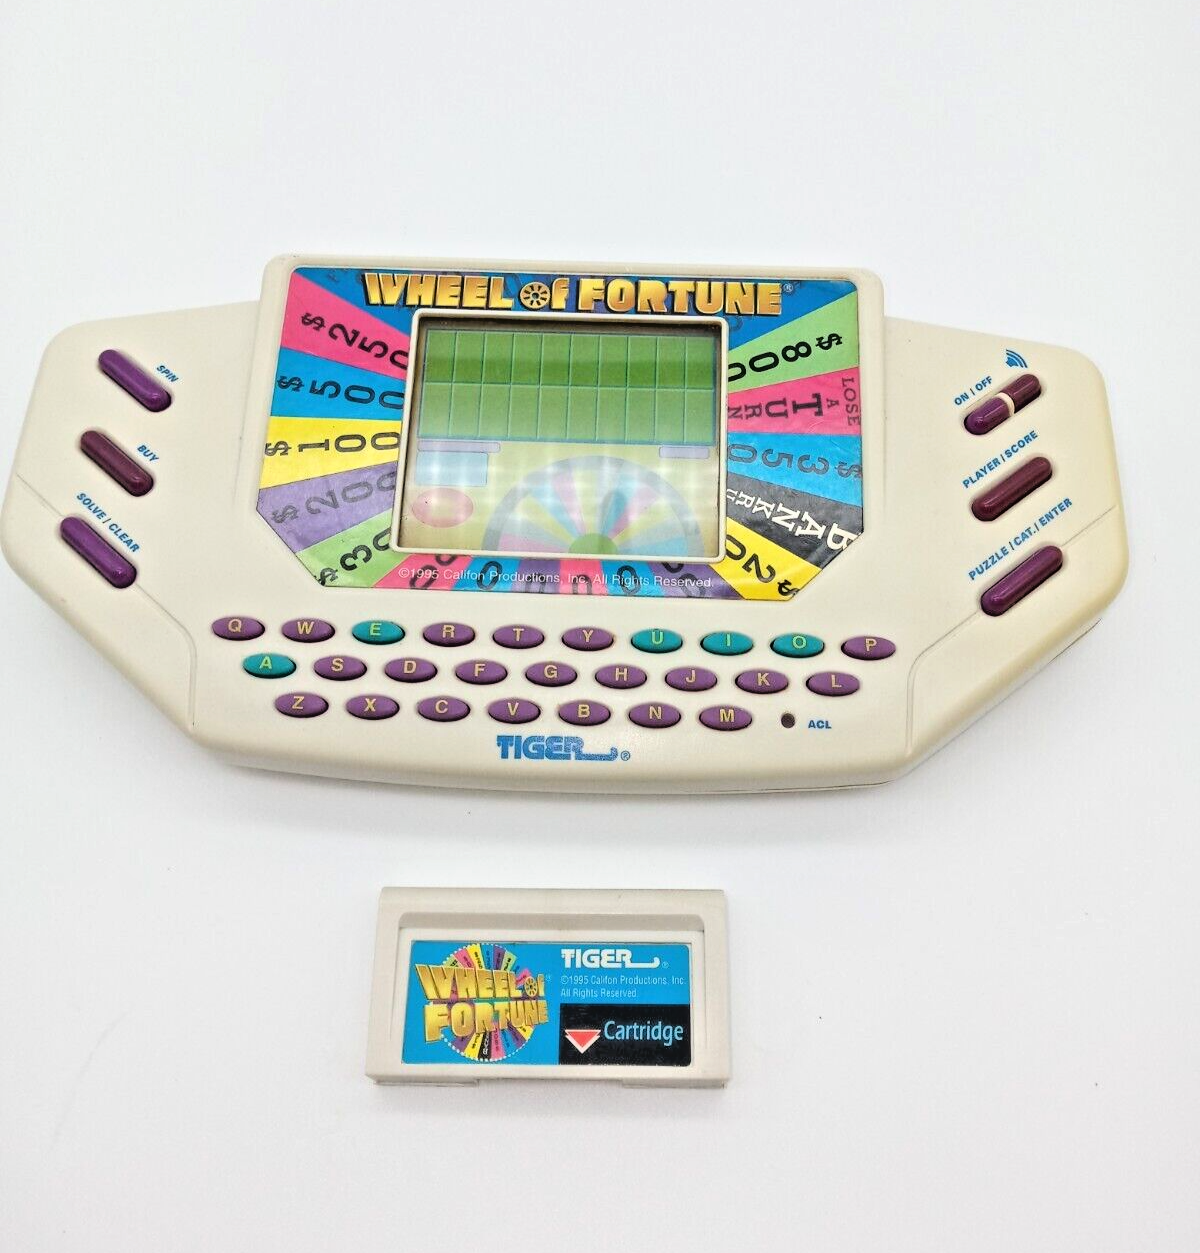 1990s handheld electronics